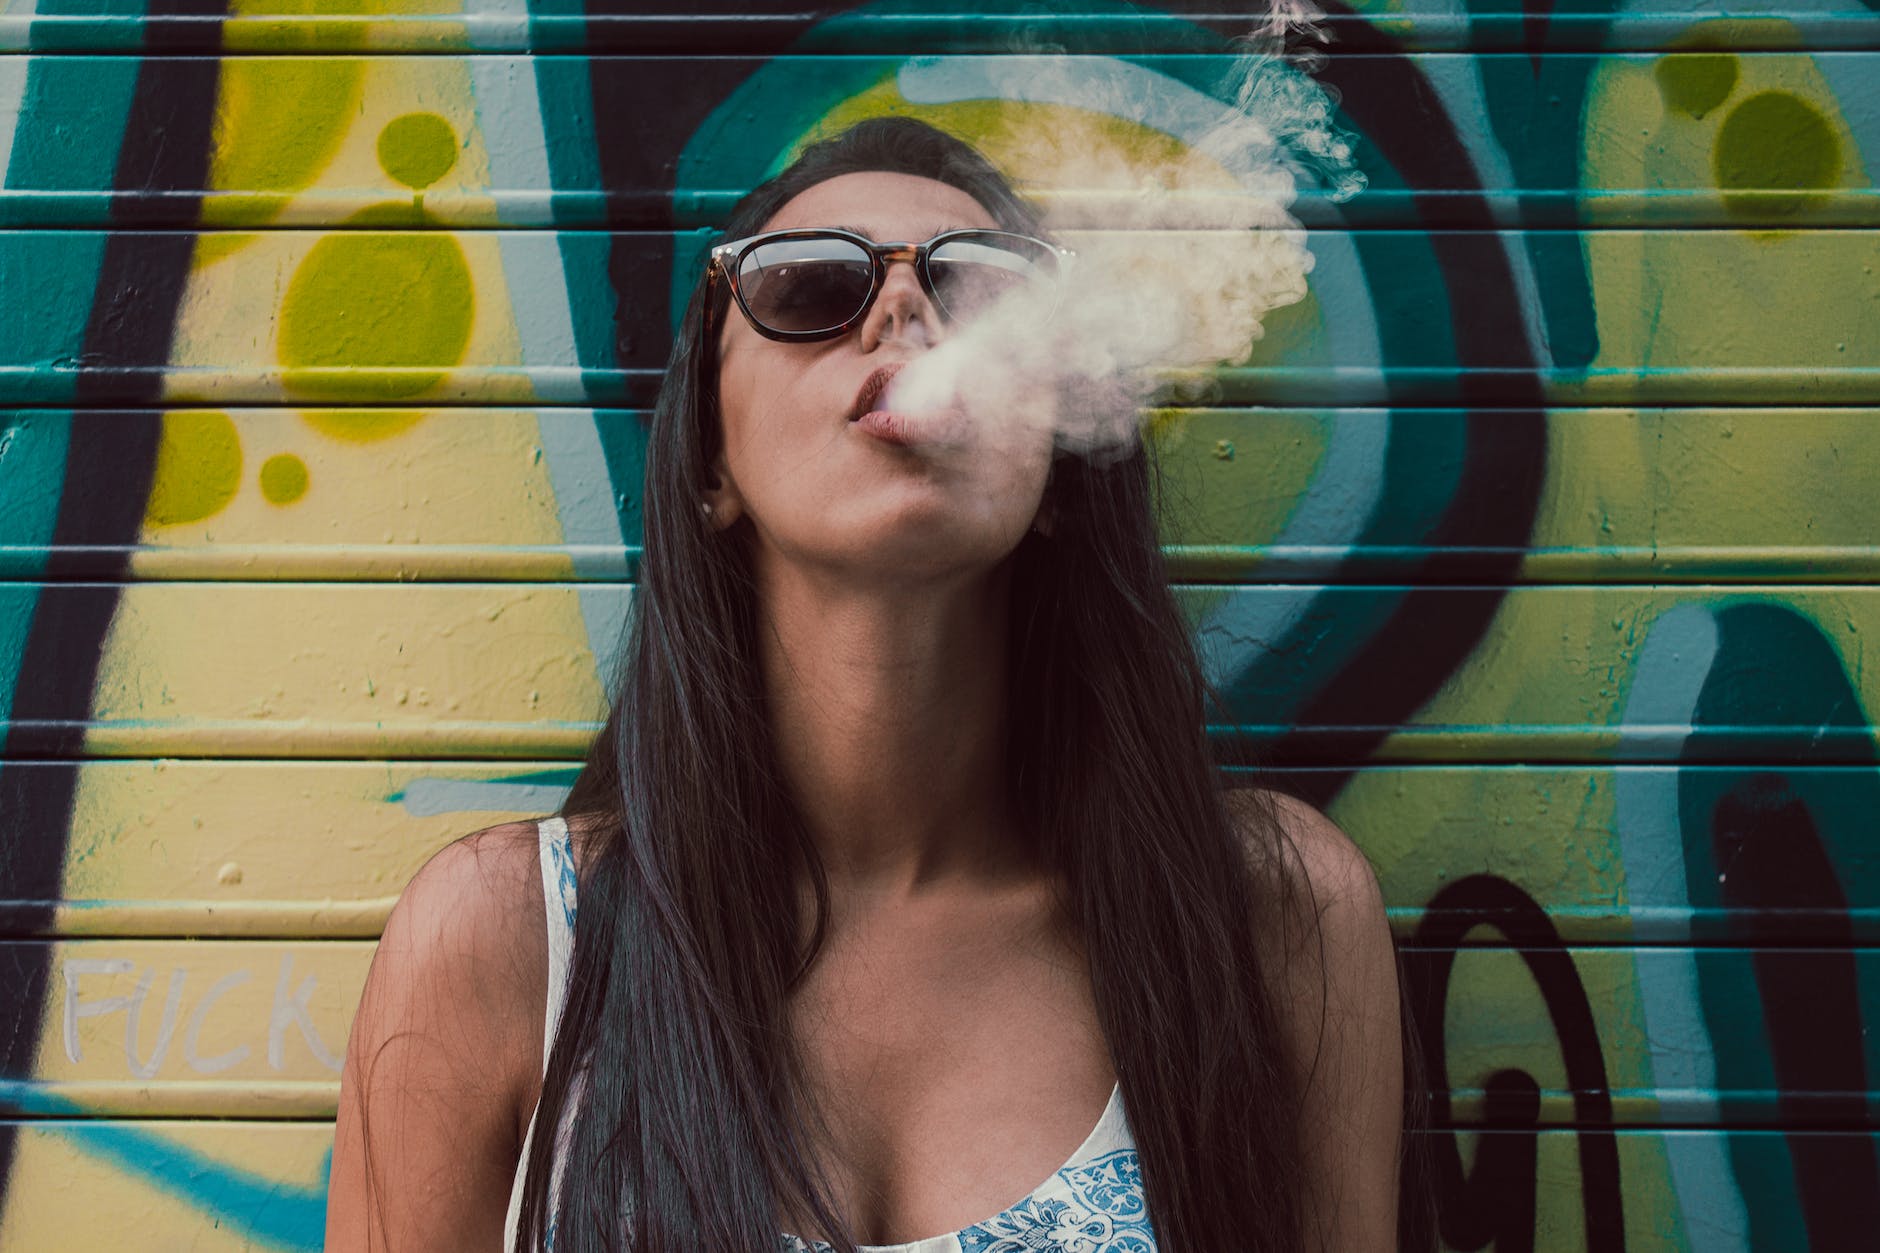 Woman wearing sunglasses while smoking